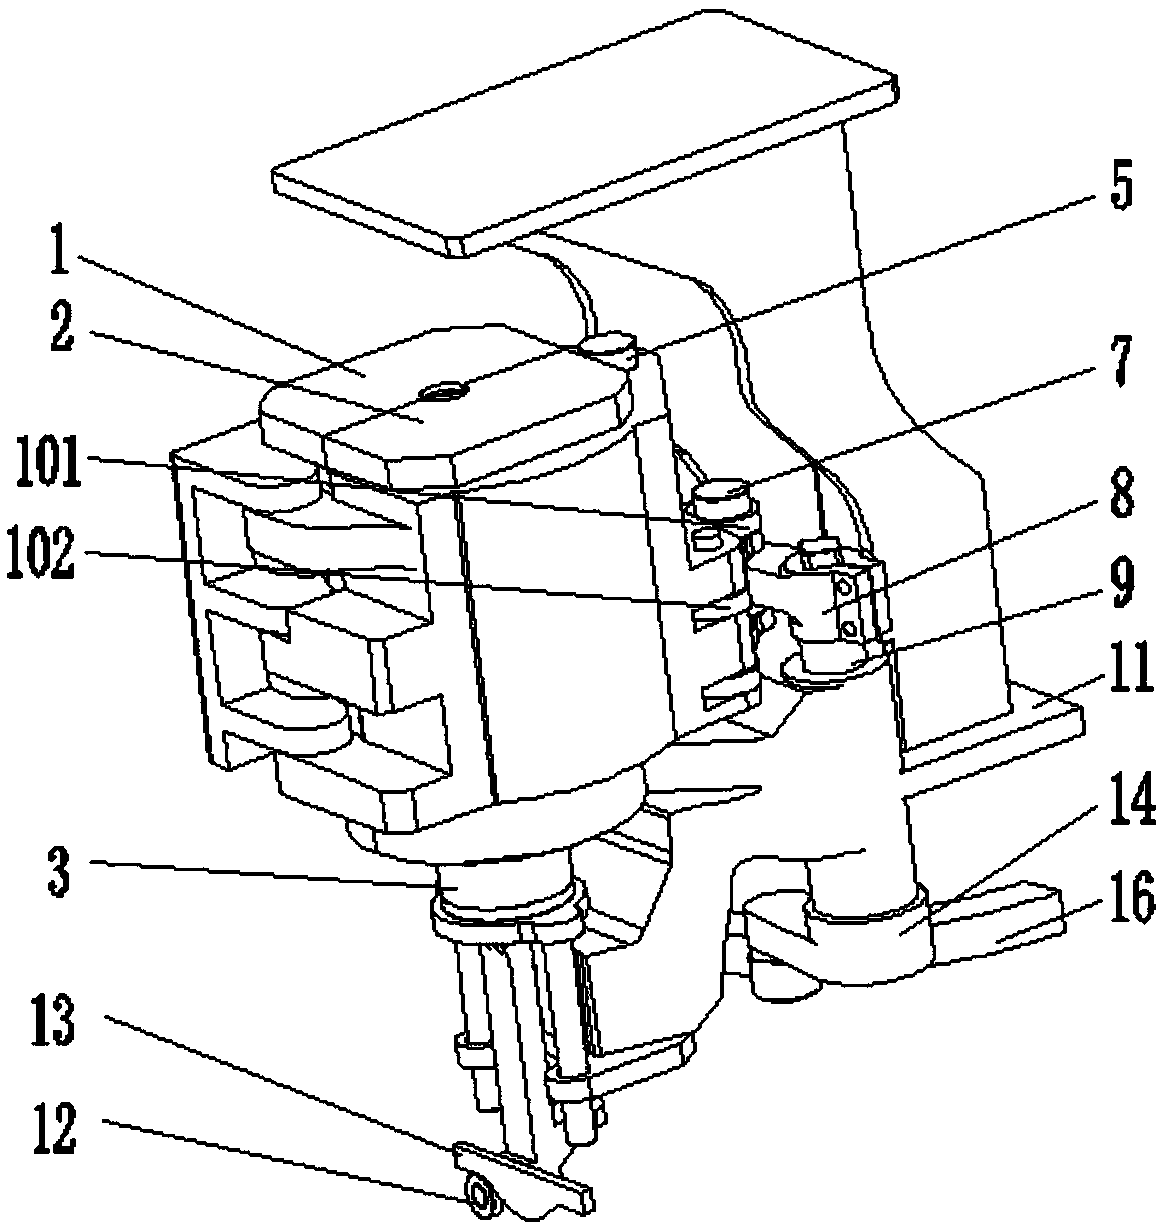 Mold motion mechanism of bottle blowing machine